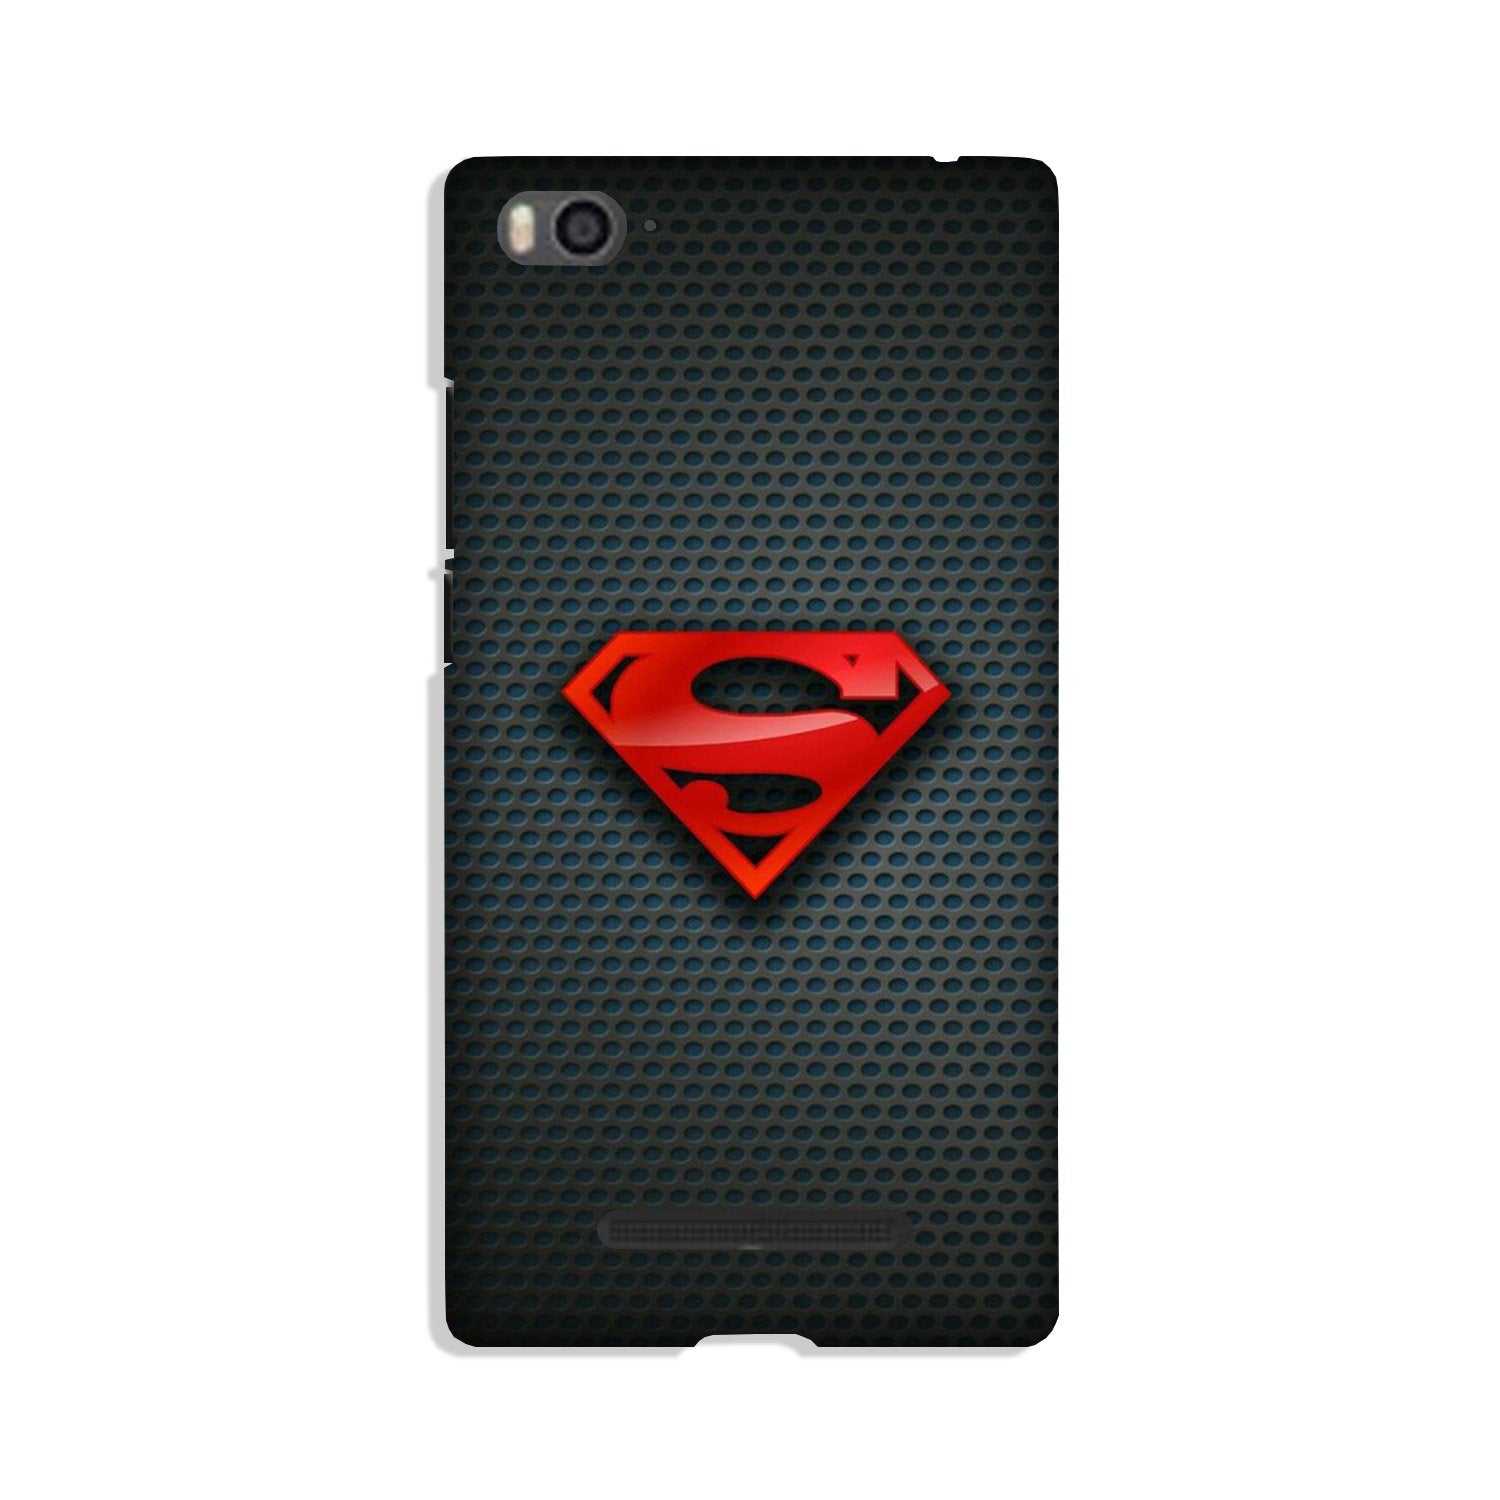 Superman Case for Xiaomi Redmi 5A (Design No. 247)